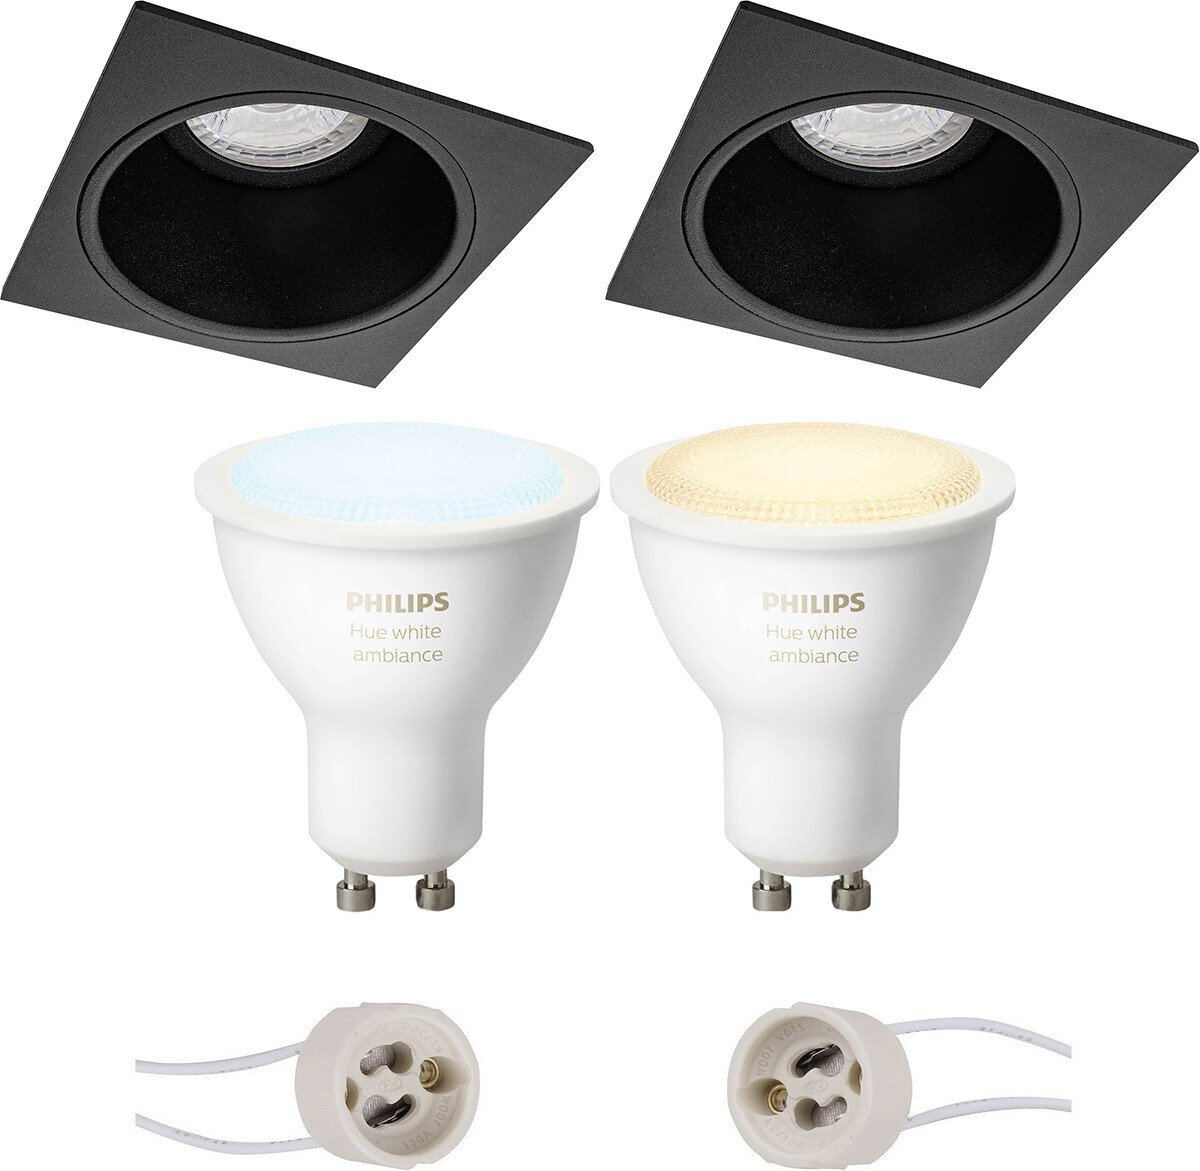 Qualu Proma Minko Pro - Inbouw Vierkant - Mat Zwart - Verdiept - 90mm - Philips Hue - LED Spot Set GU10 - White Ambiance - Bluetooth